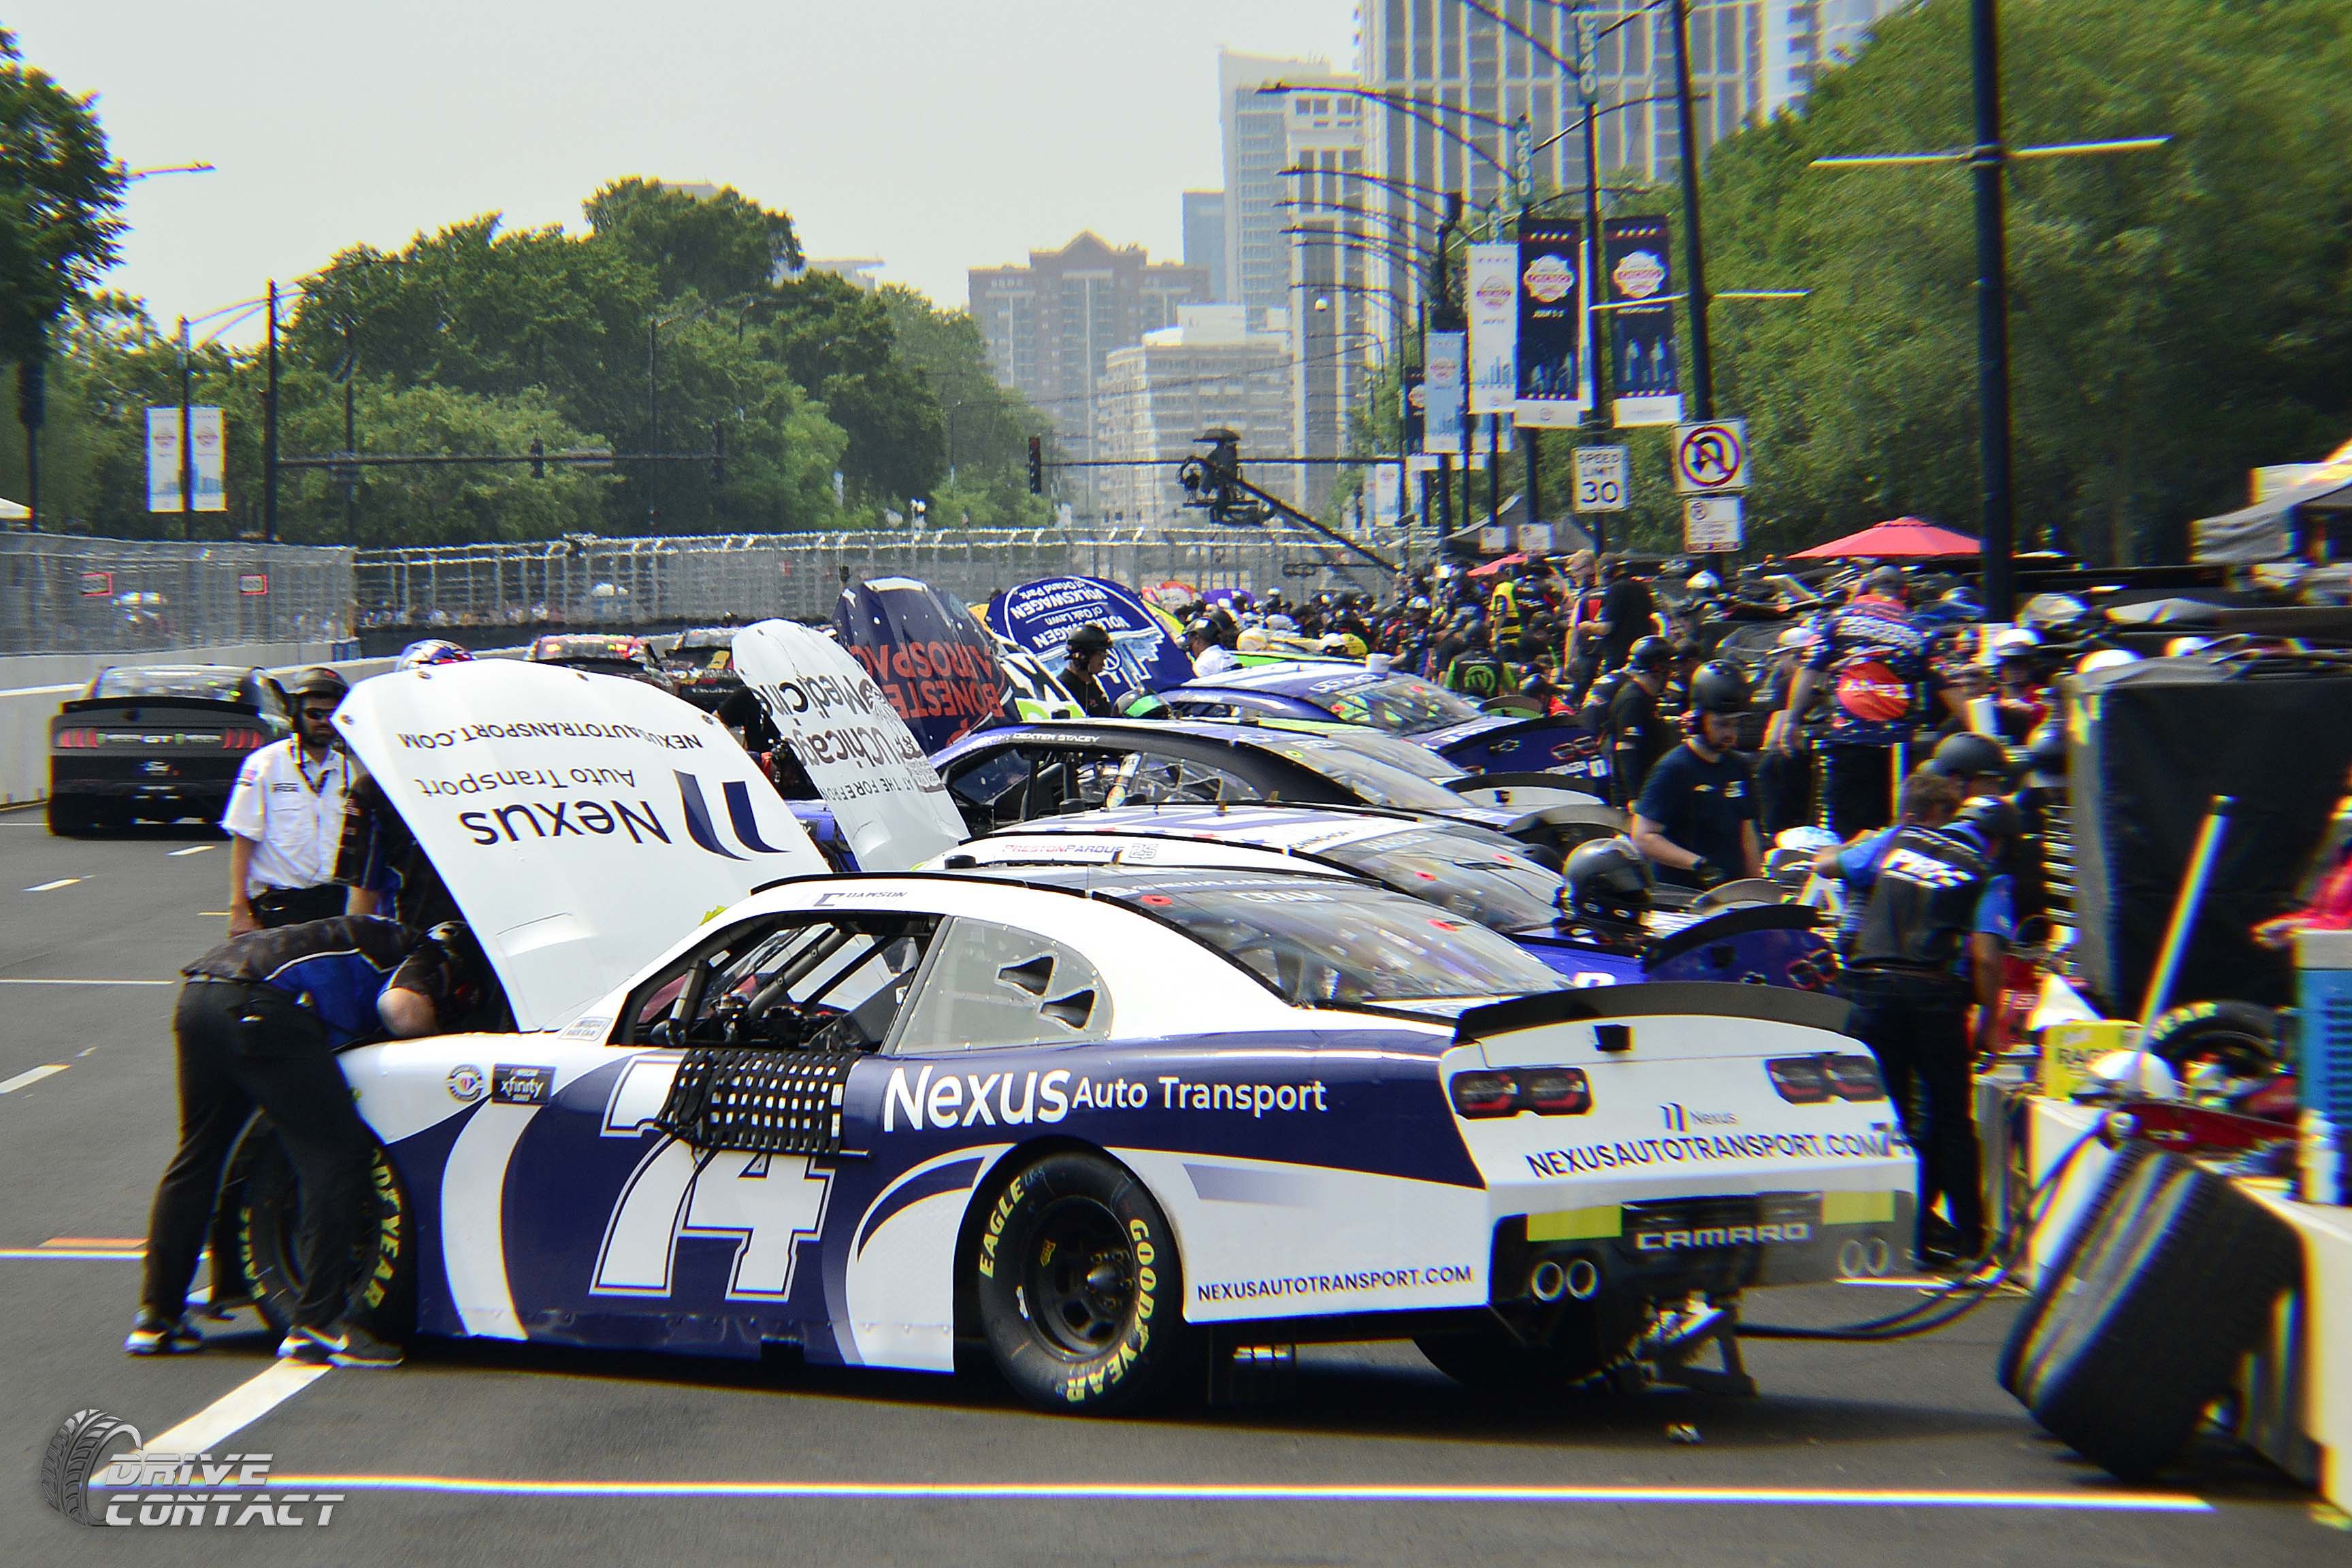 2023 NASCAR Chicago Street Race pitlane